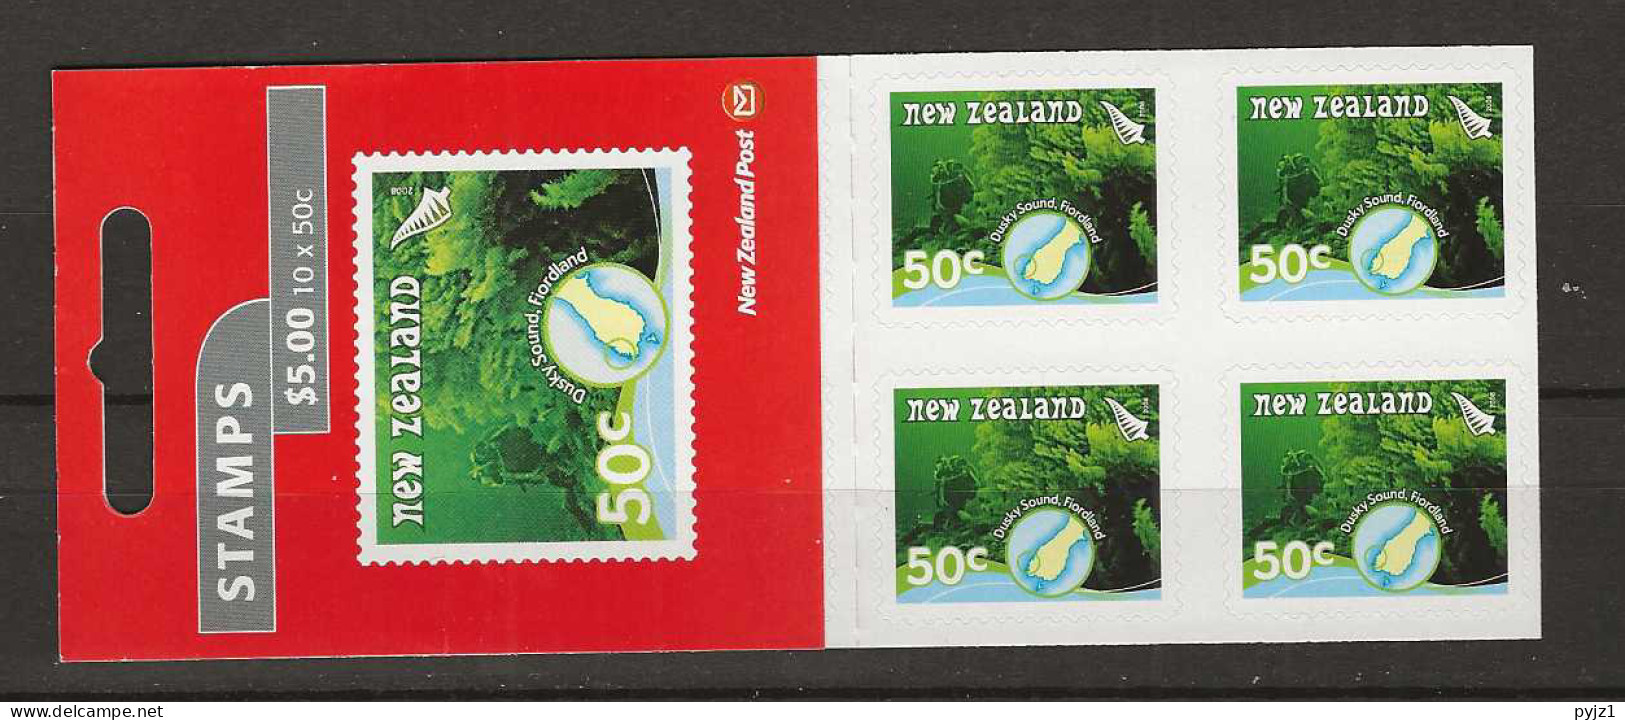 2008 MNH New Zealand Booklet Mi 2478 Postfris** - Markenheftchen